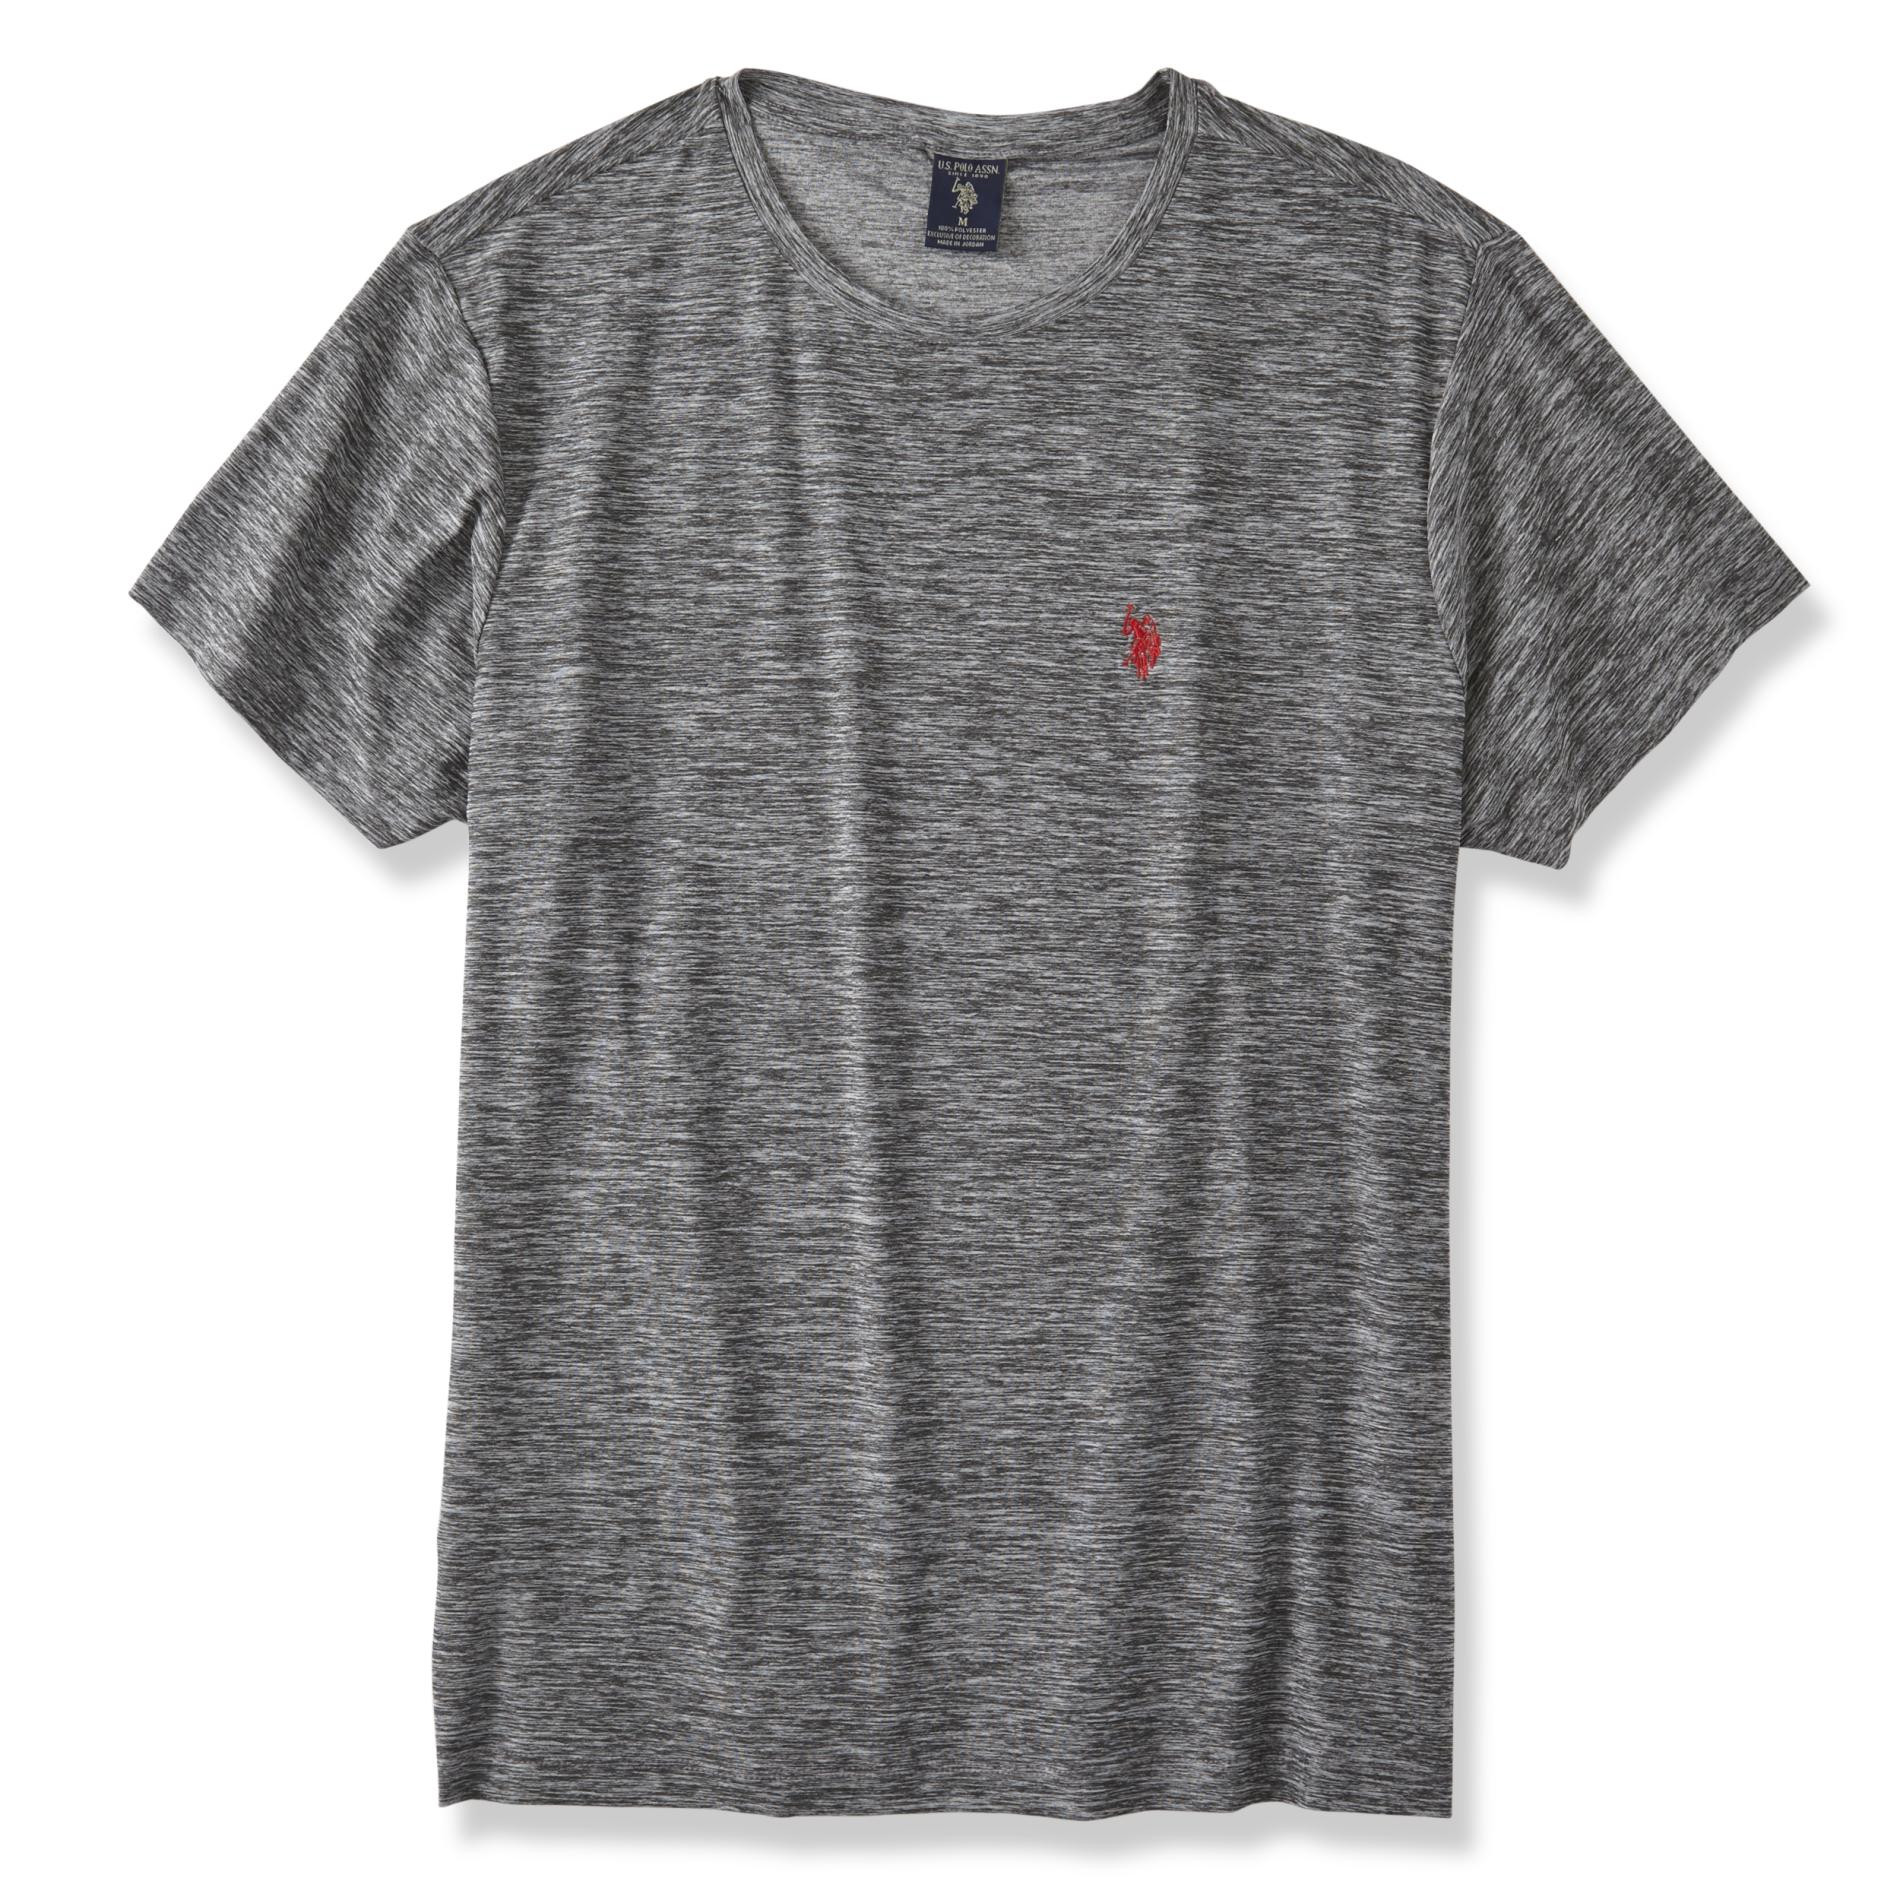 U.S. Polo Assn. Men's T-Shirt - Space-Dyed